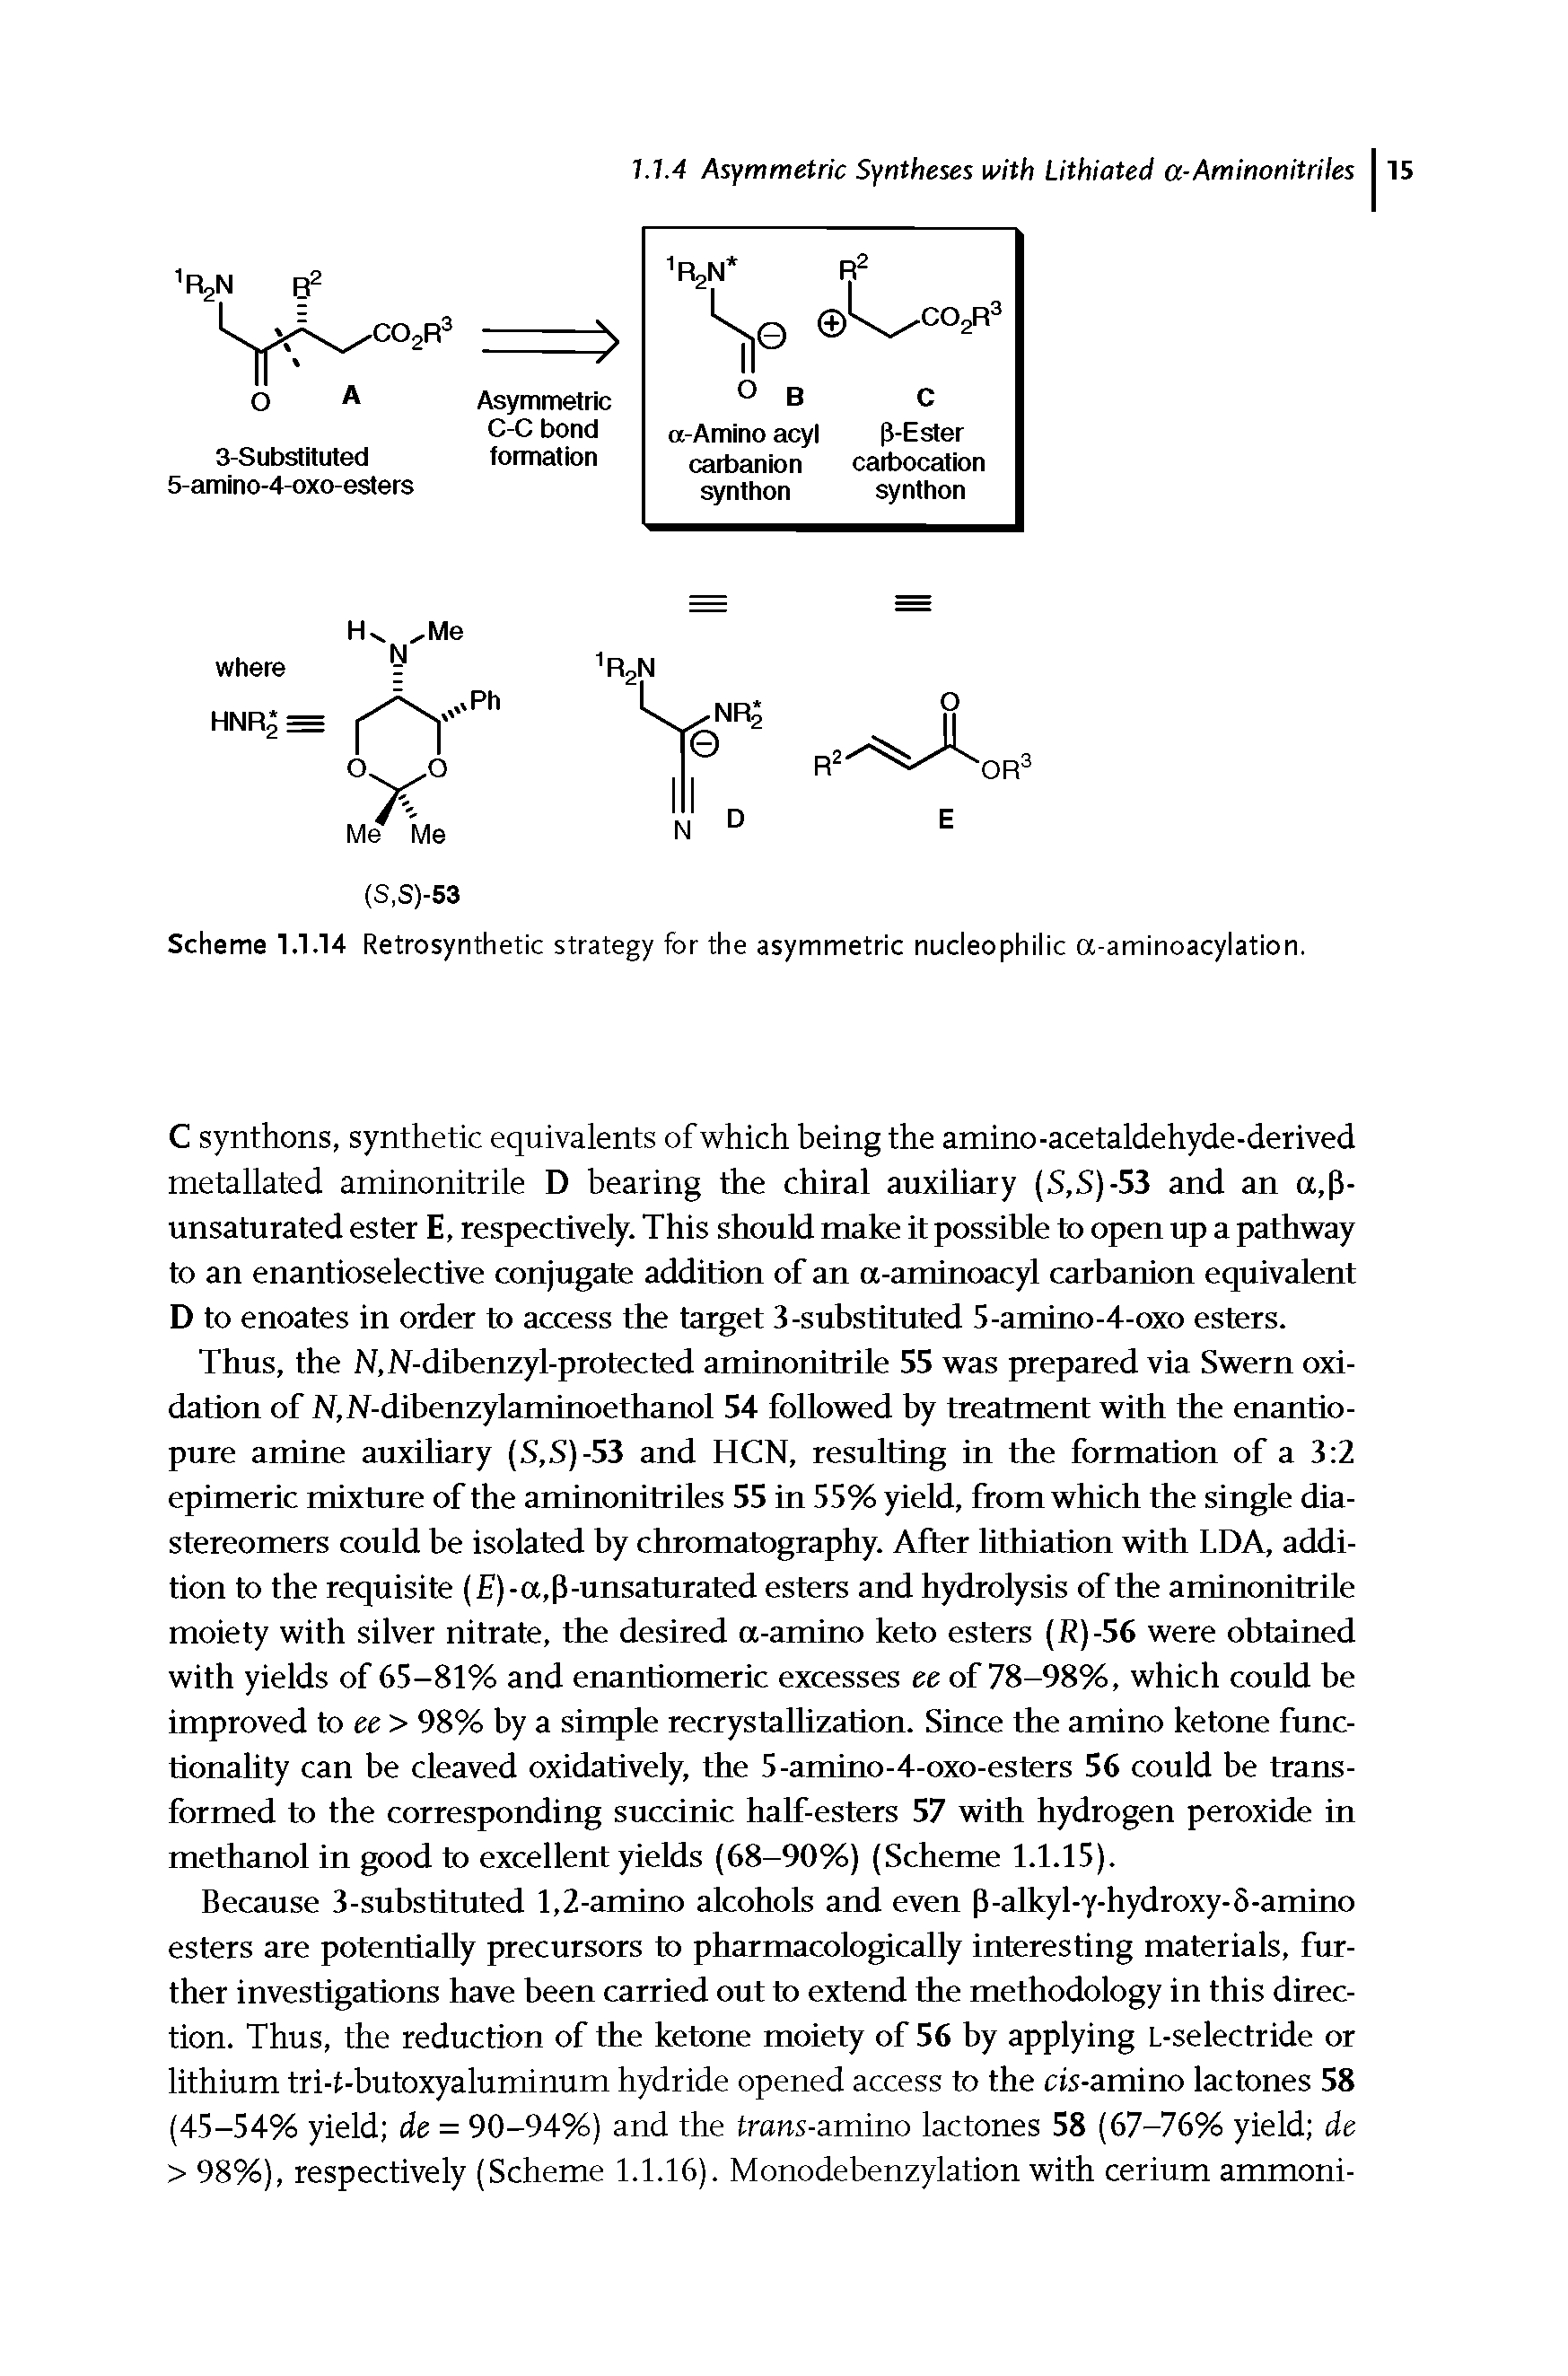 Scheme 1.1.14 Retrosynthetic strategy for the asymmetric nucleophilic a-aminoacylation.